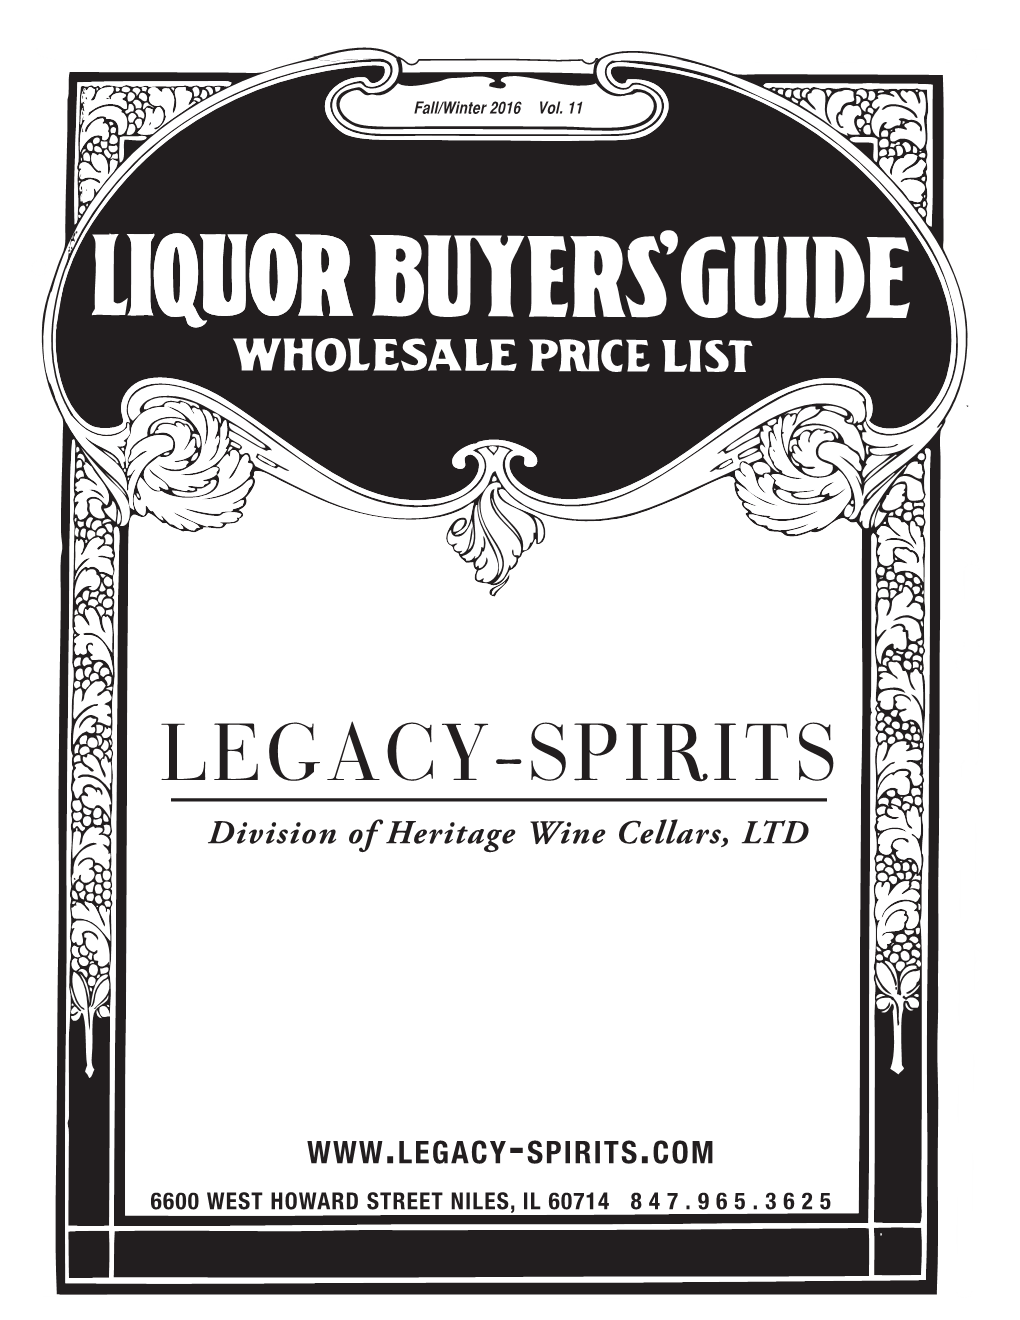 Legacy-Spirits Division of Heritage Wine Cellars, LTD